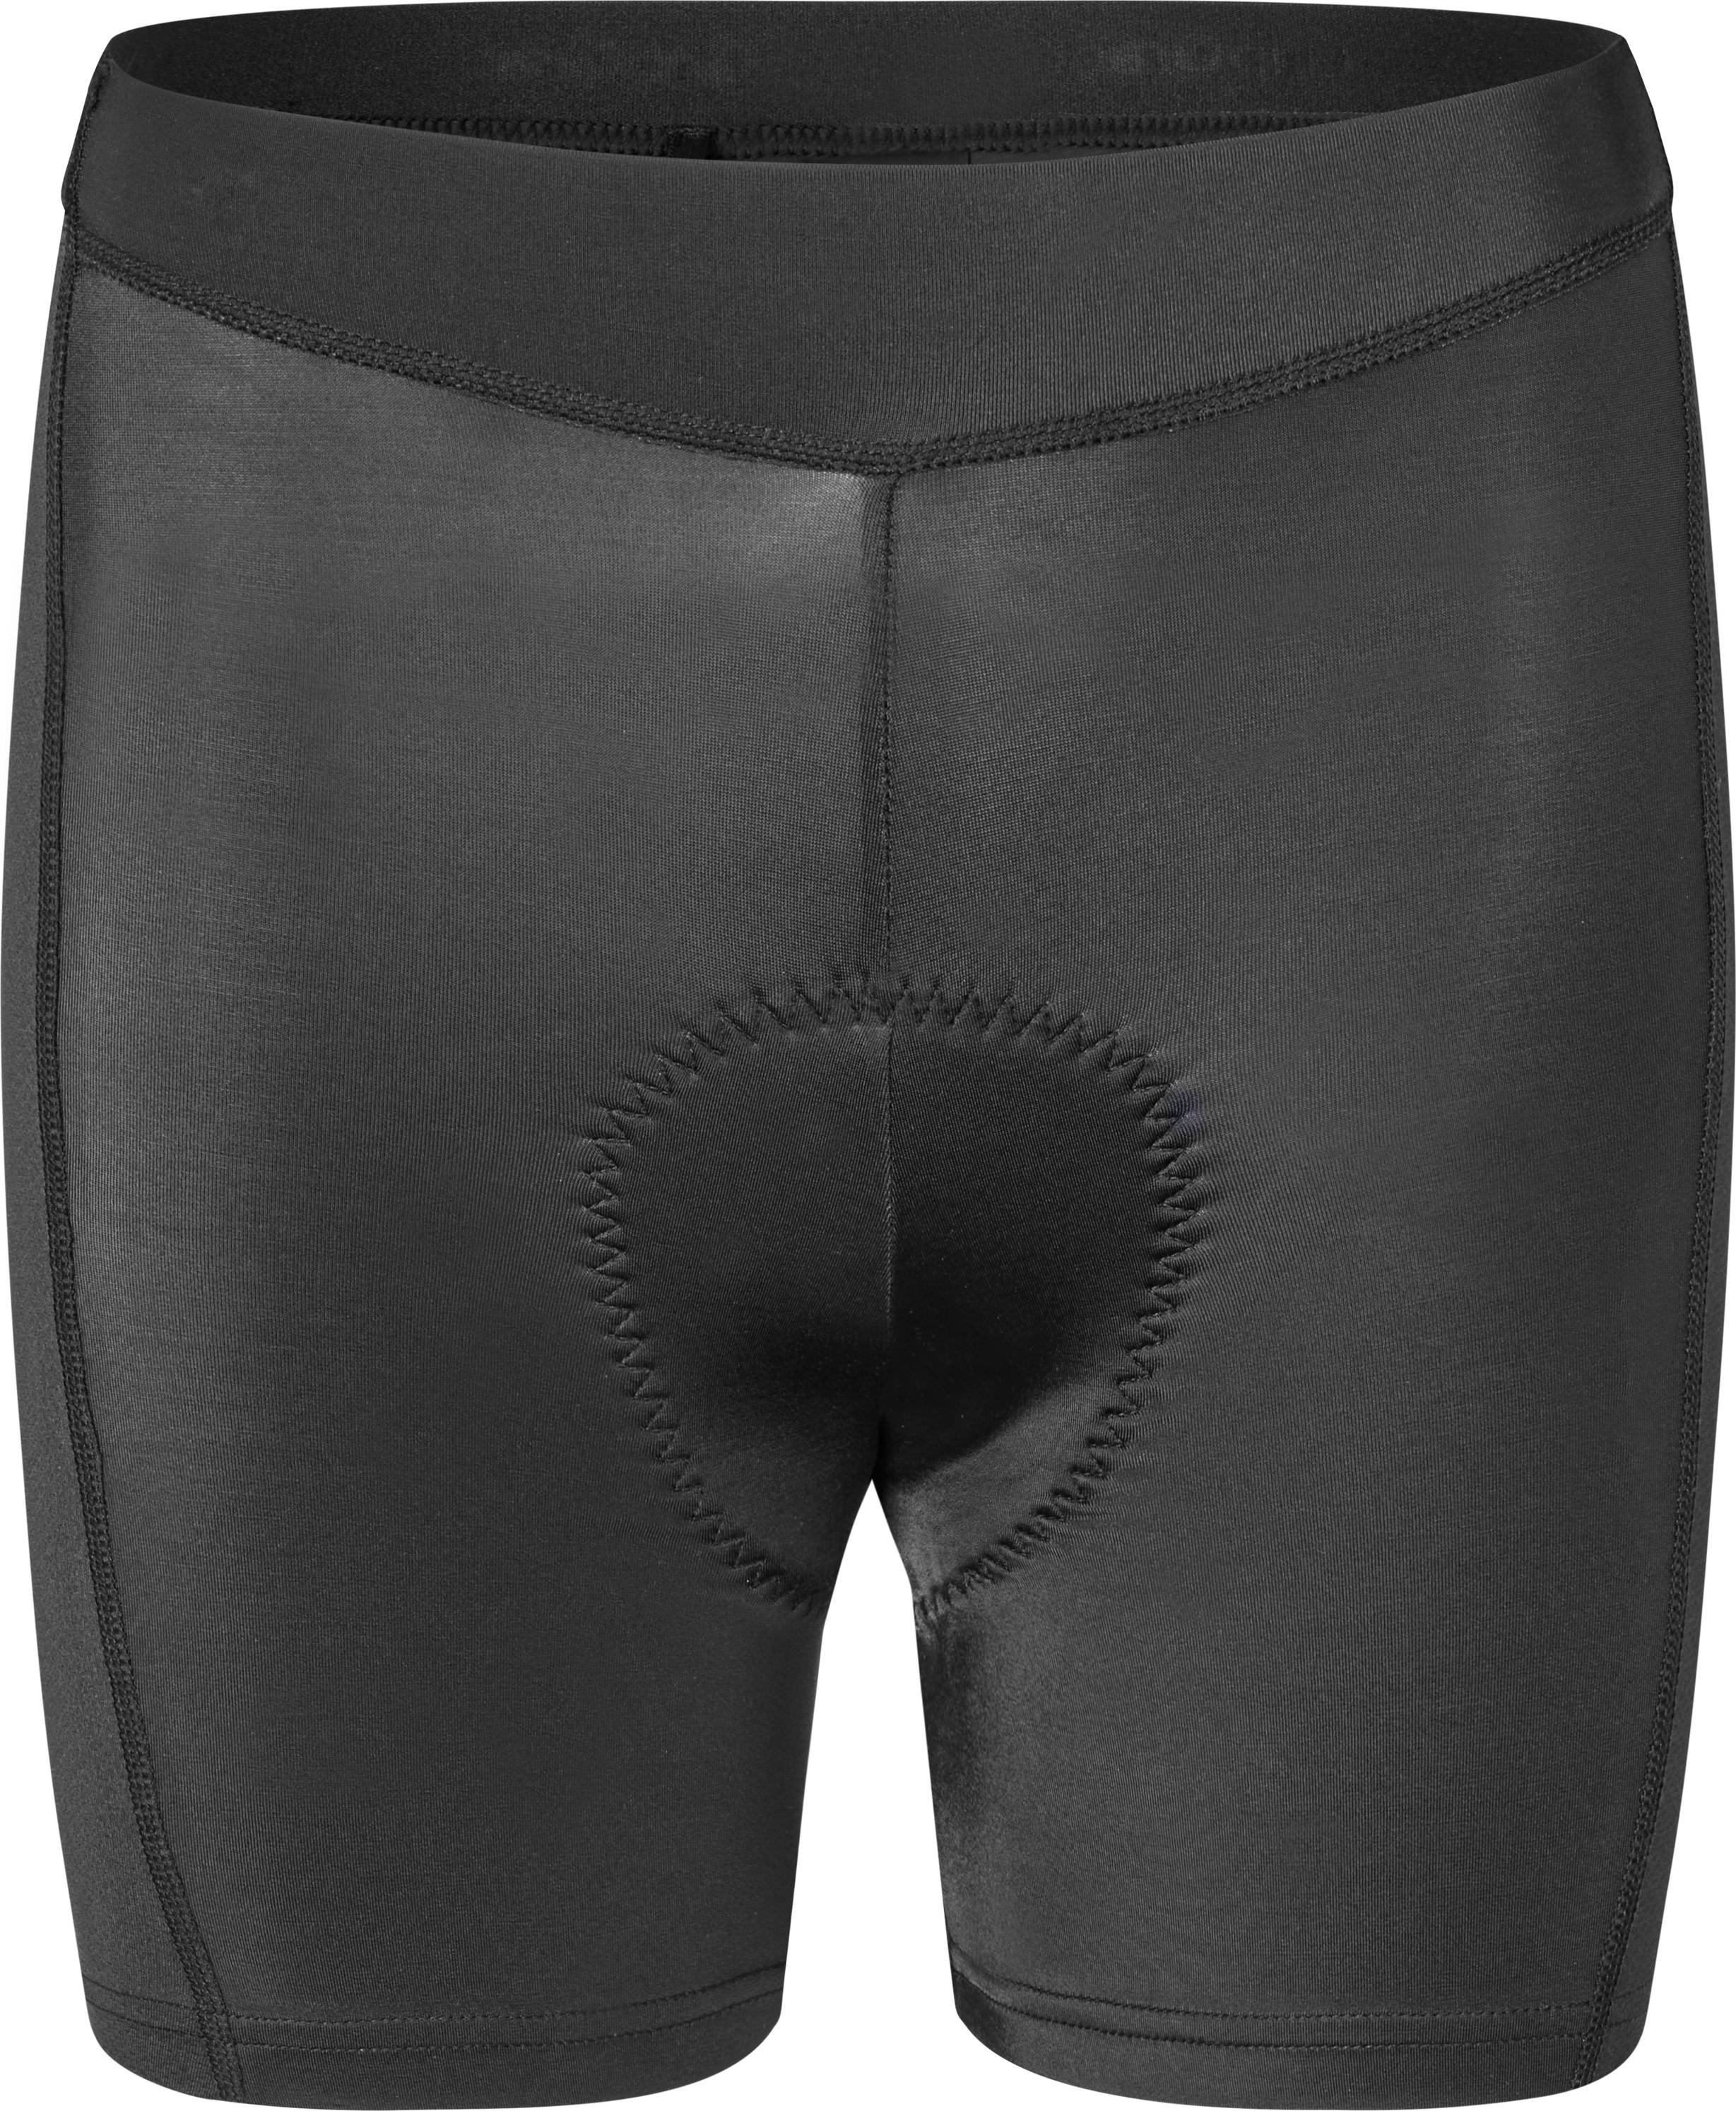 GripGrab Women’s Padded Underwear Shorts Black